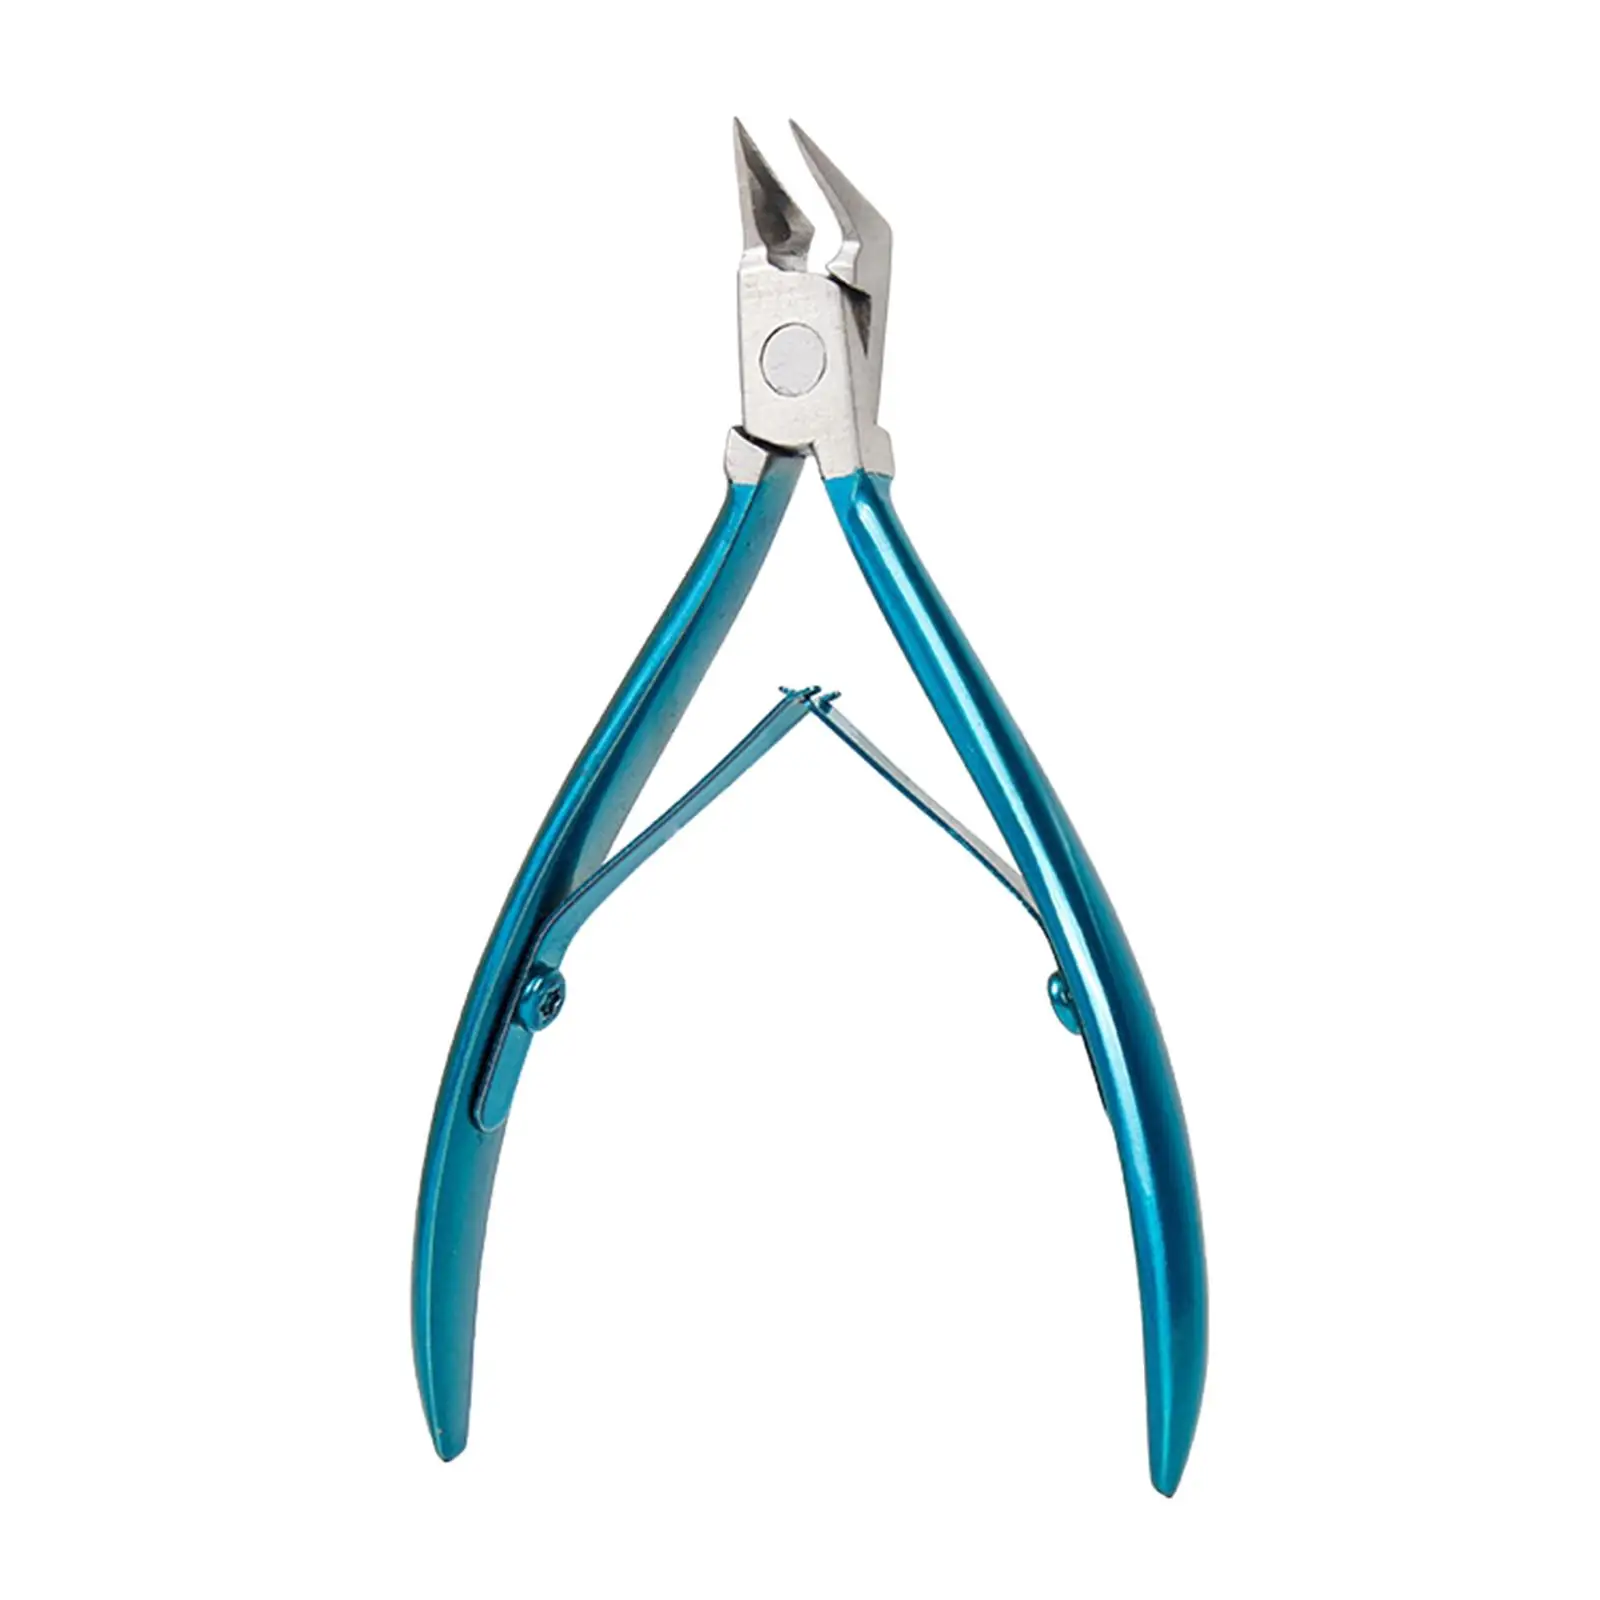 Toenail clippers Comfortable Handle Precision Nail scissors Pedicure Grooming Tool Toenails Cutter for Dead Skins Salon Home SPA